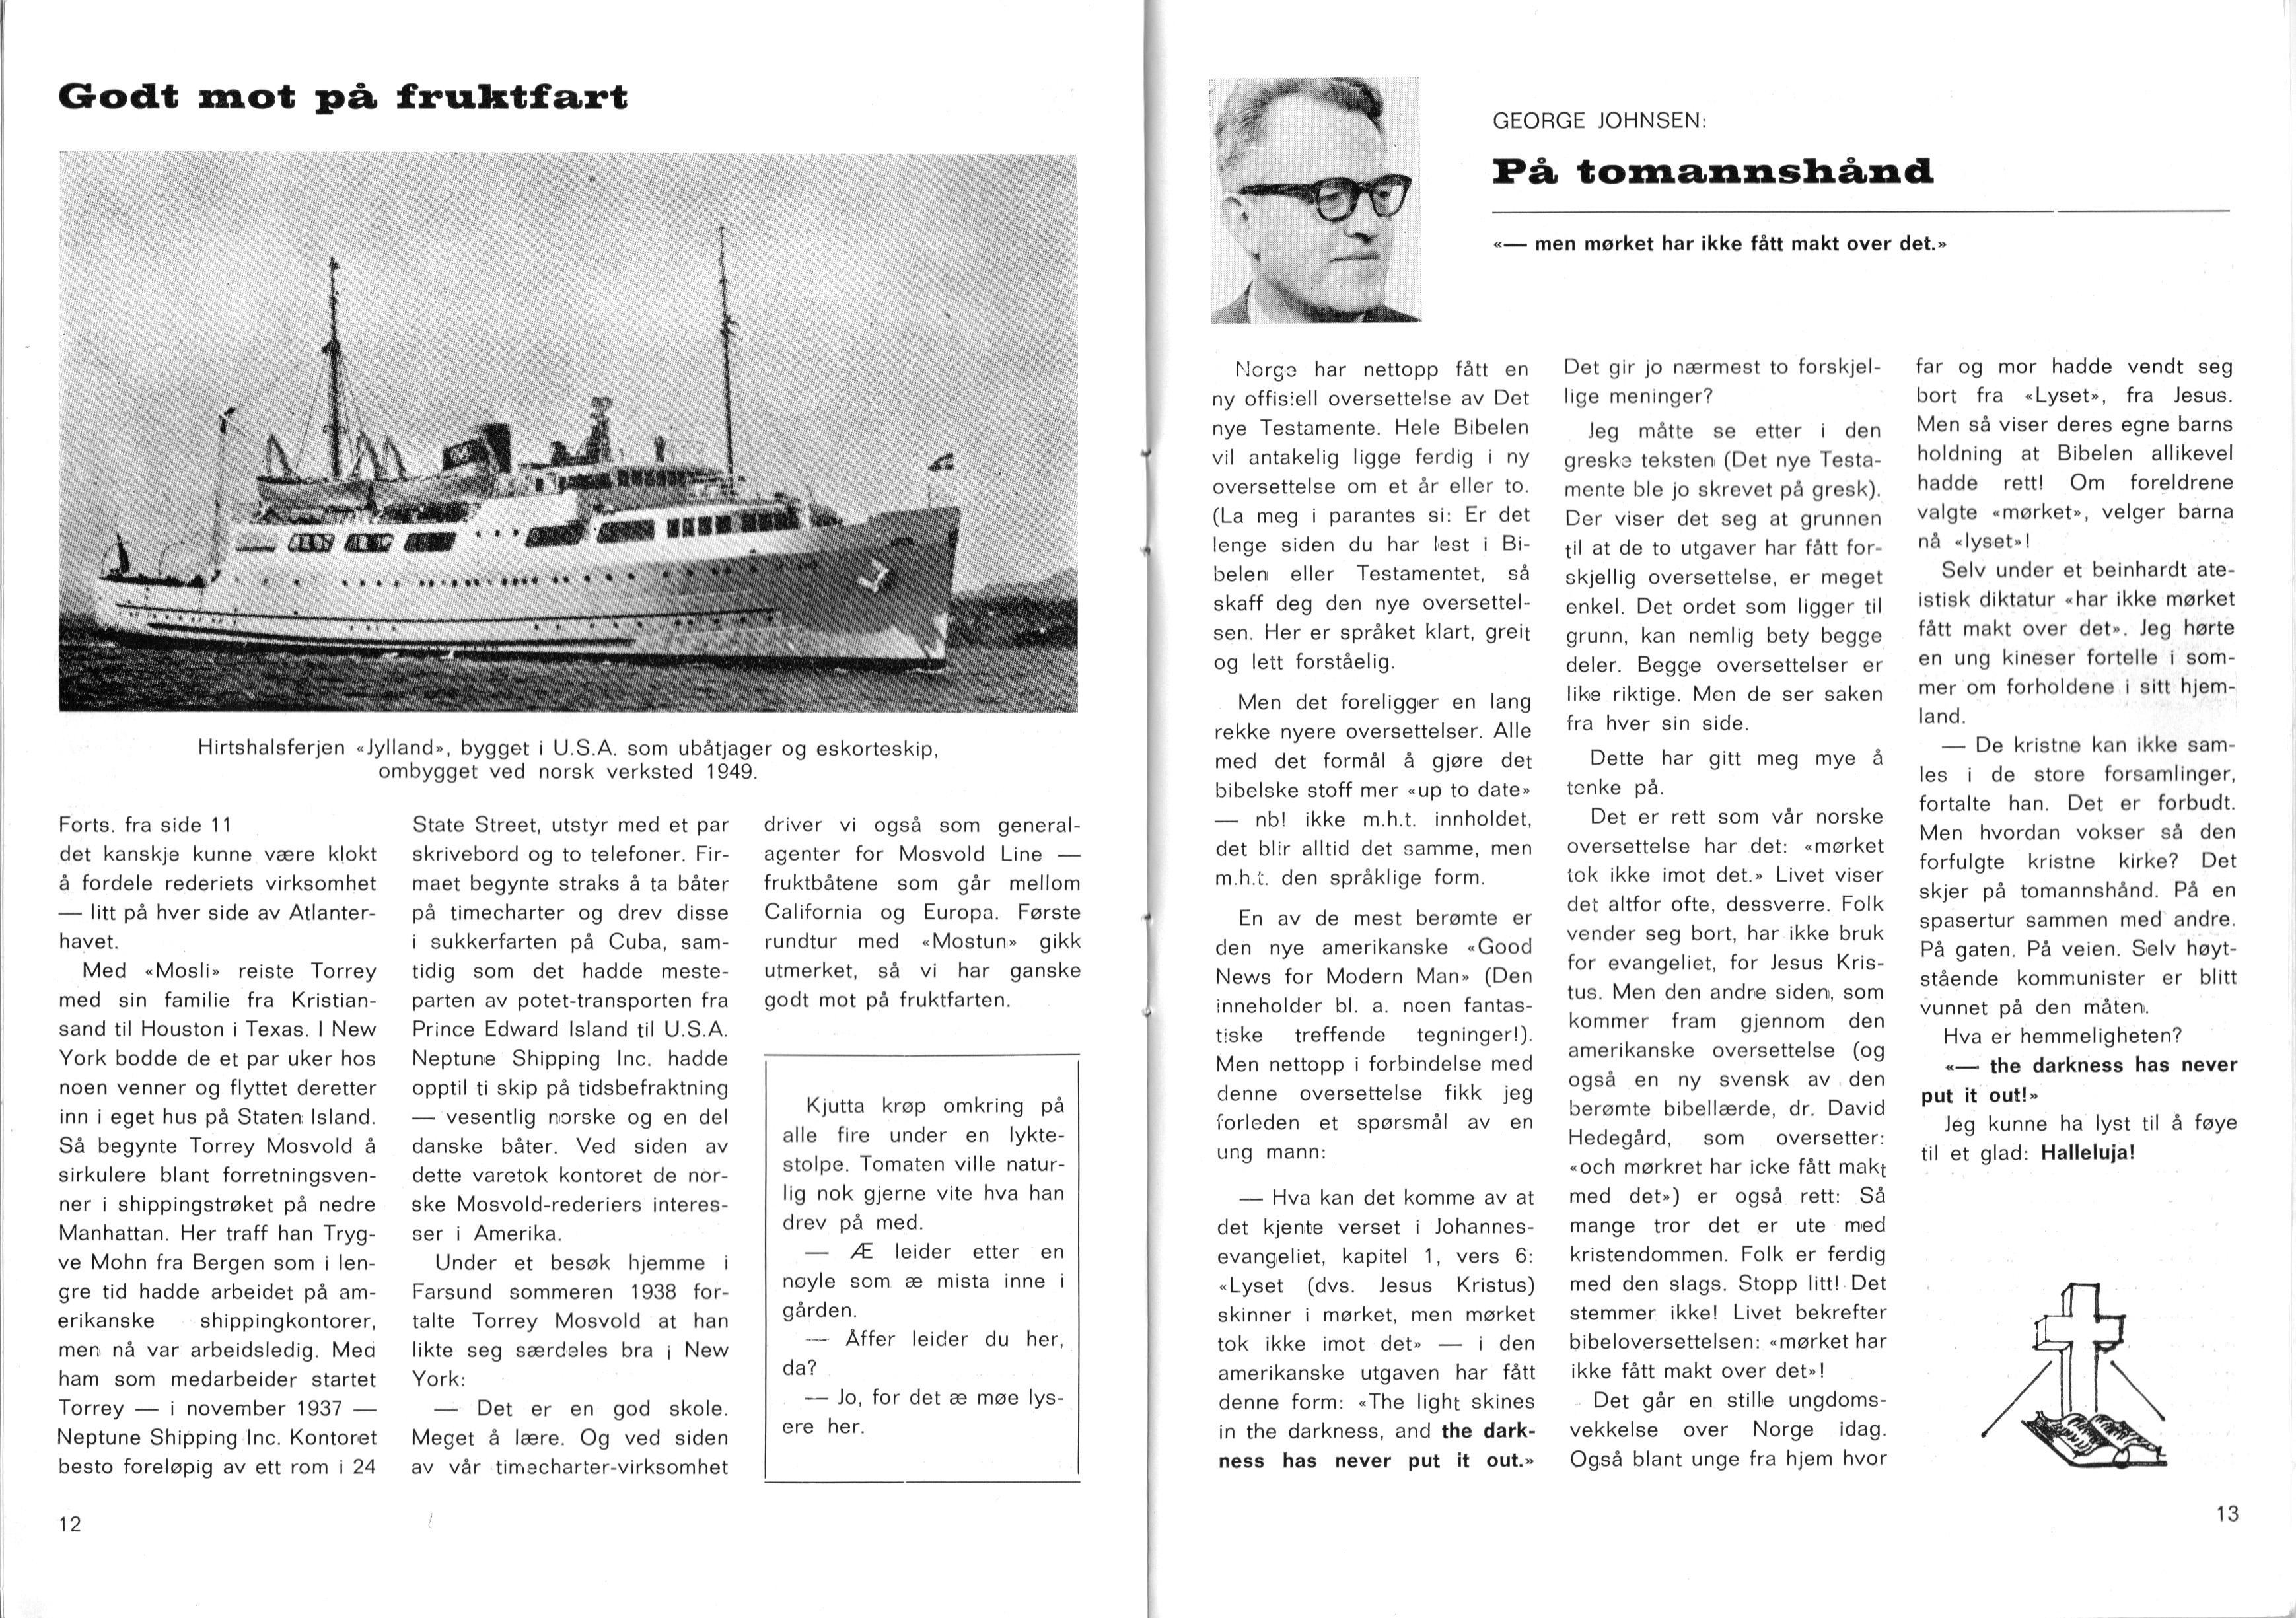 Mosvoldposten September 191173 5 2